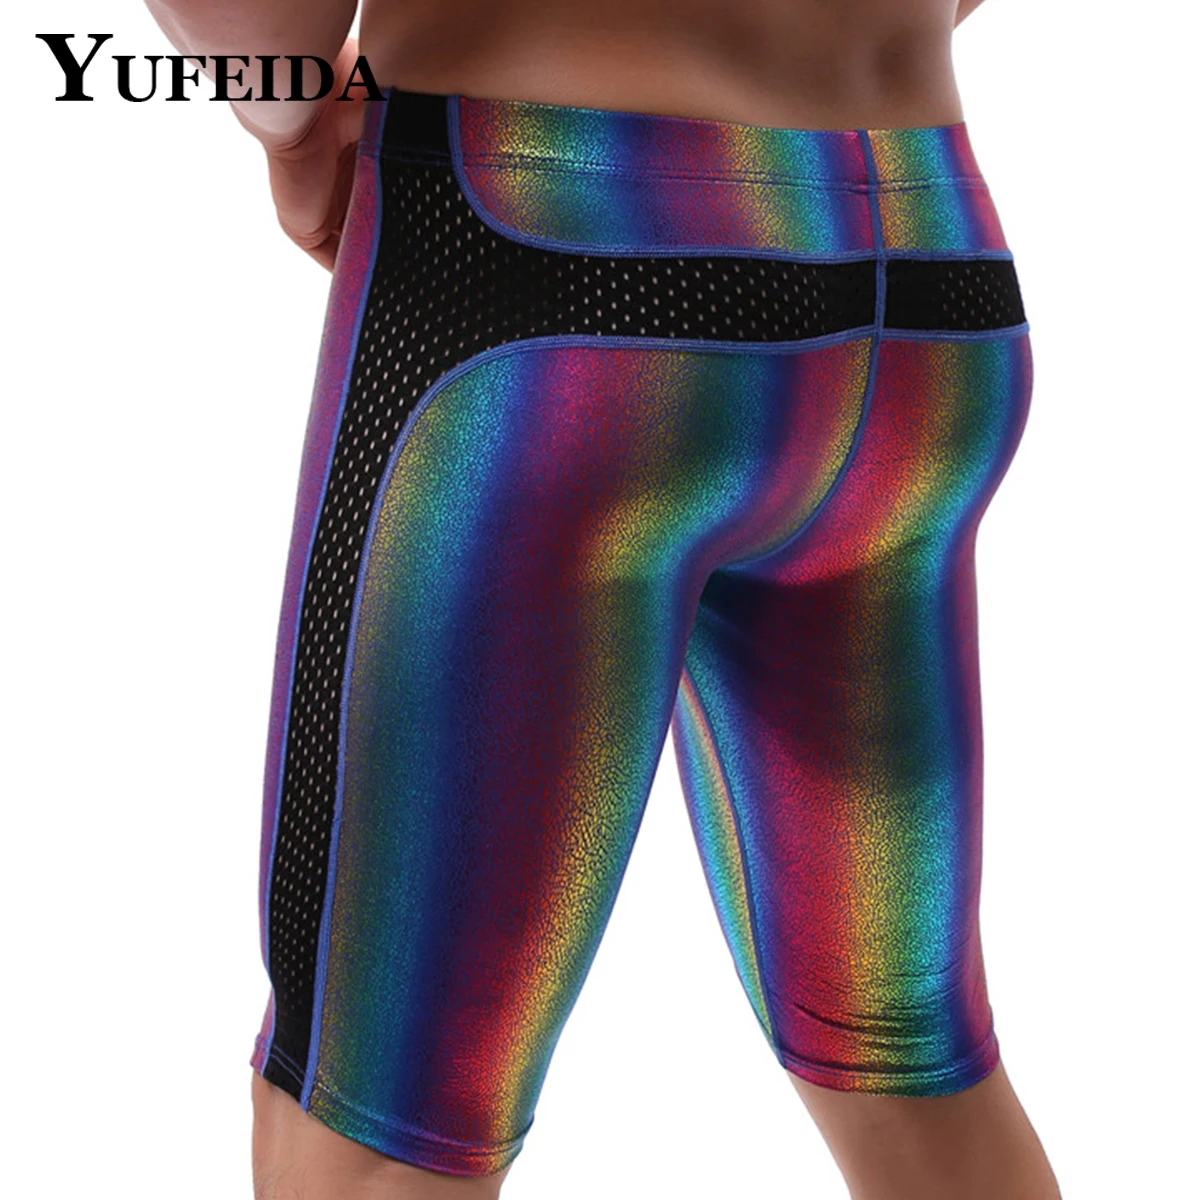 

YUFEIDA Sexy Men Leather Shorts Homme Rainbow Stripe Faux Leather Panty Man U Convex Pouch Long Leg Underpant Cueca Calzoncillos